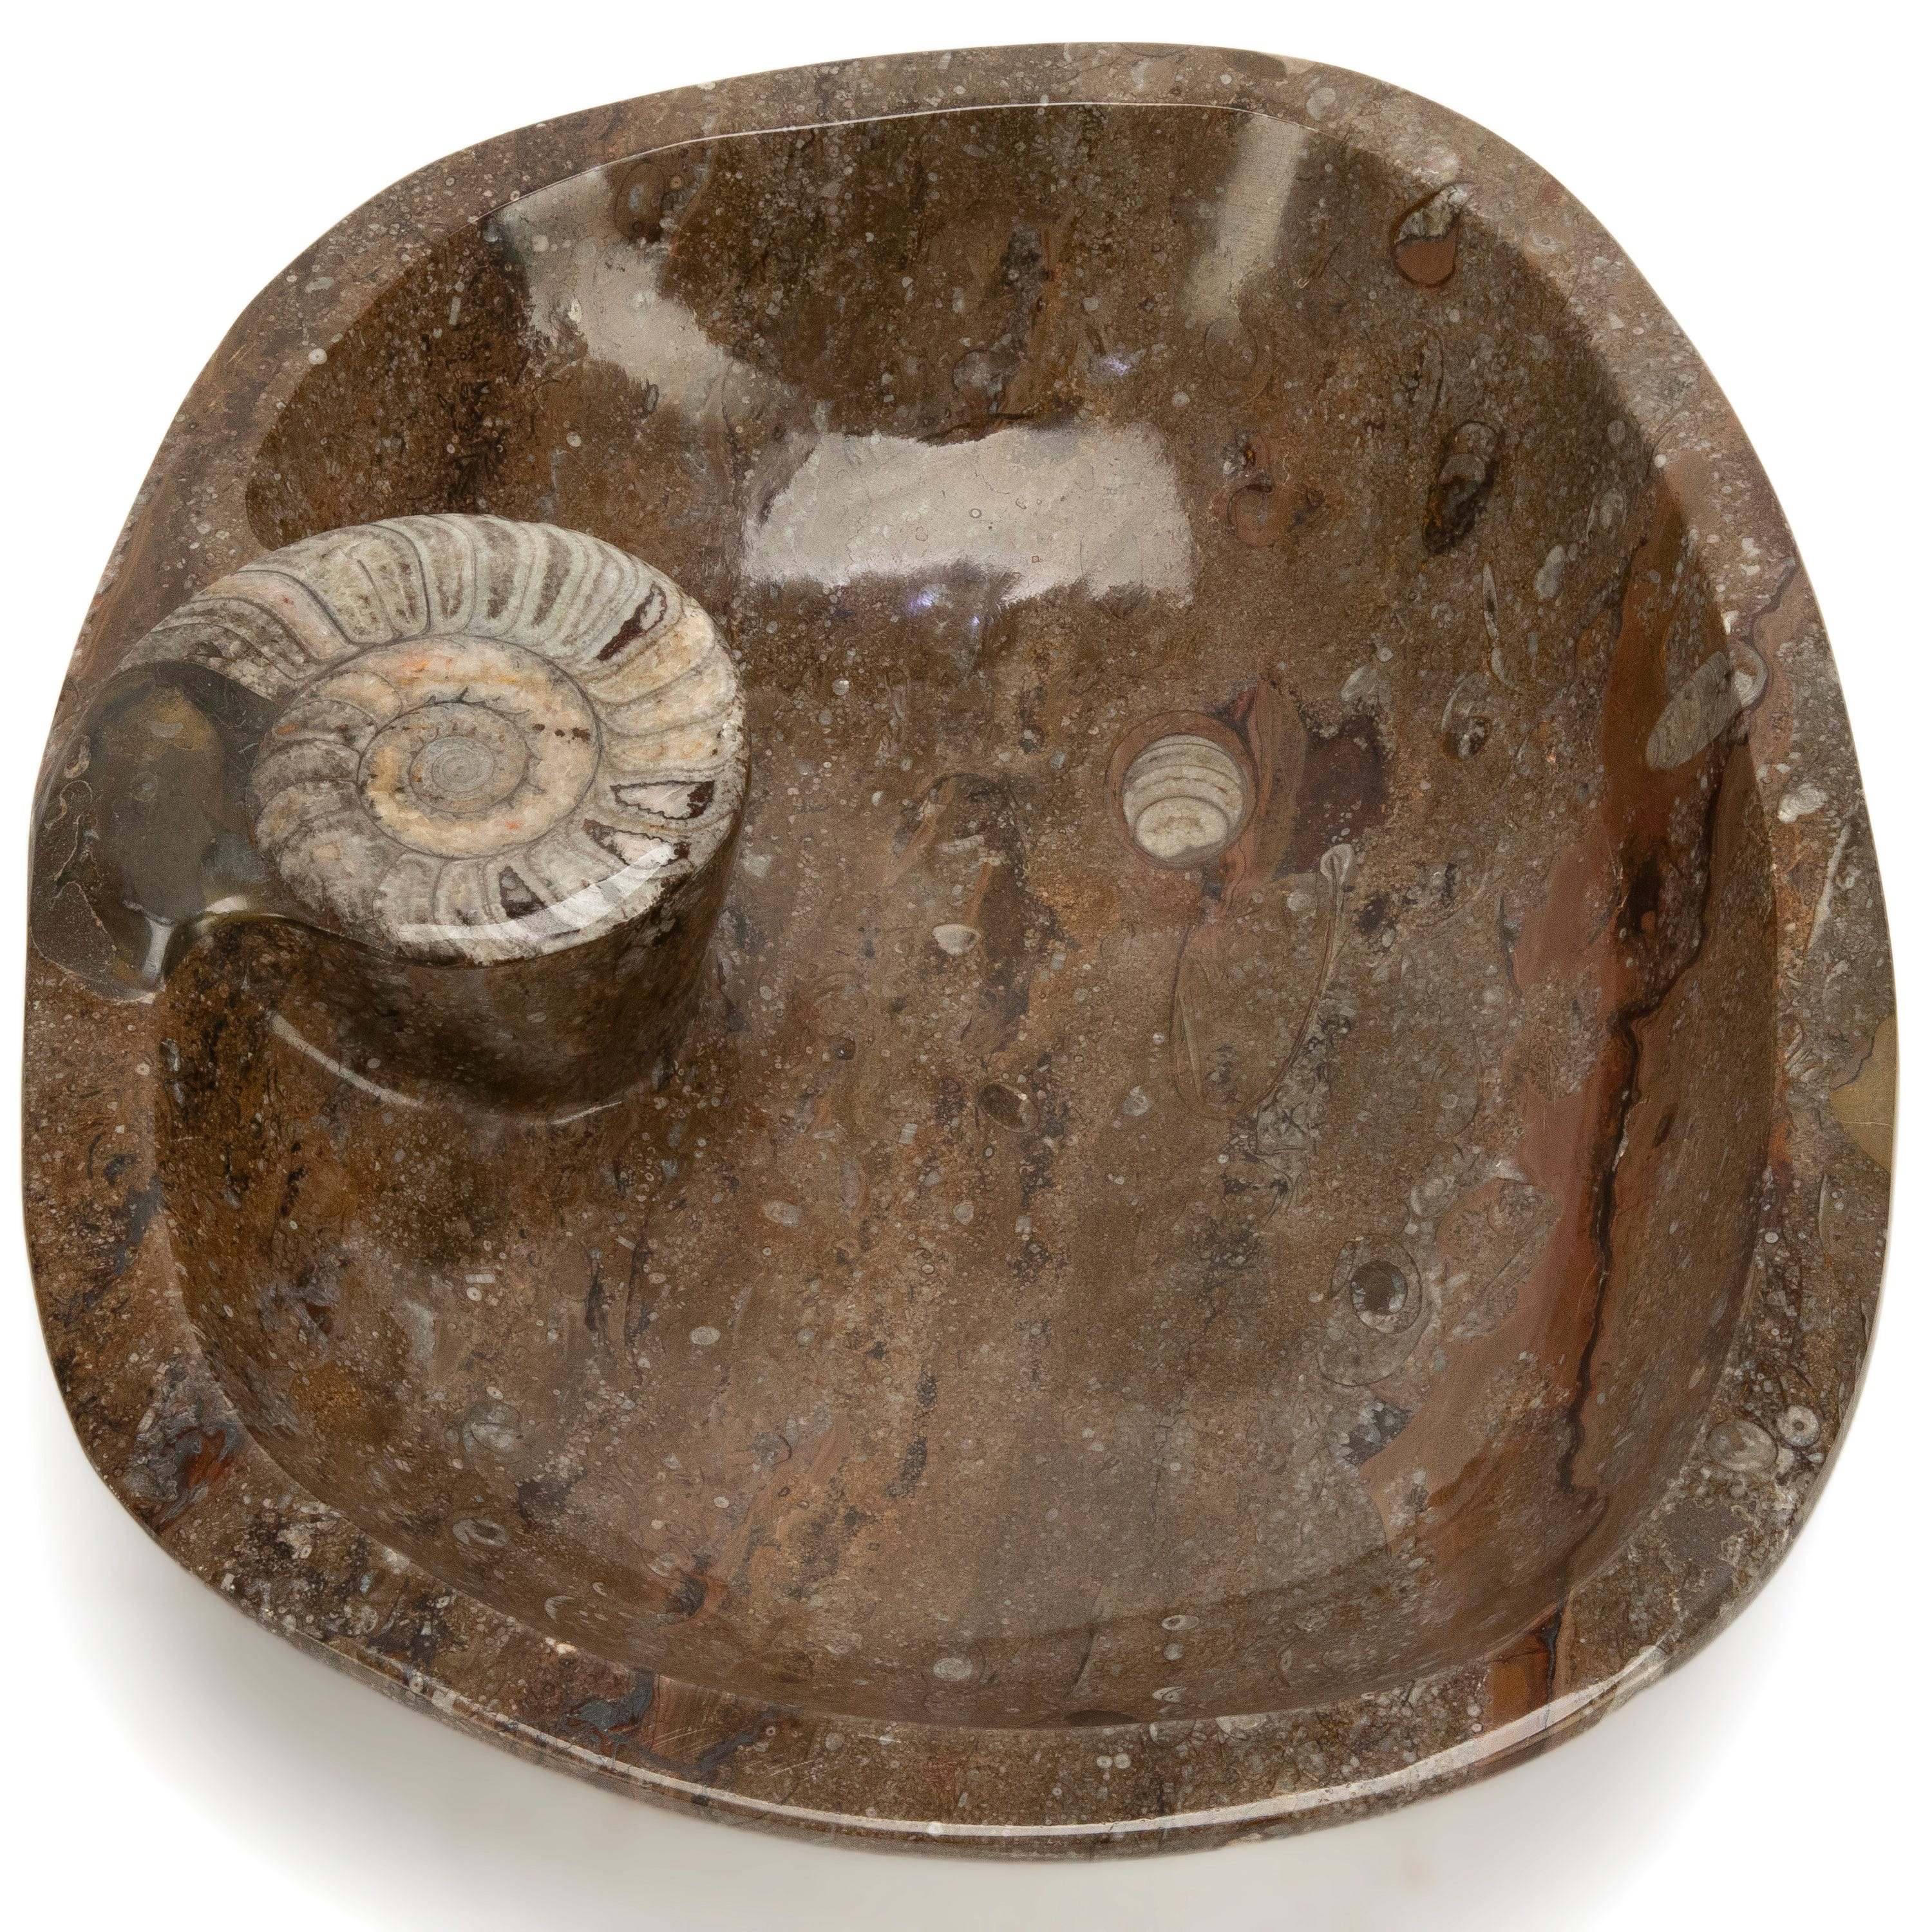 KALIFANO Ammonite Ammonite Fossil Sink Bowl from Morocco - 18.5" AMBOWL3200.006